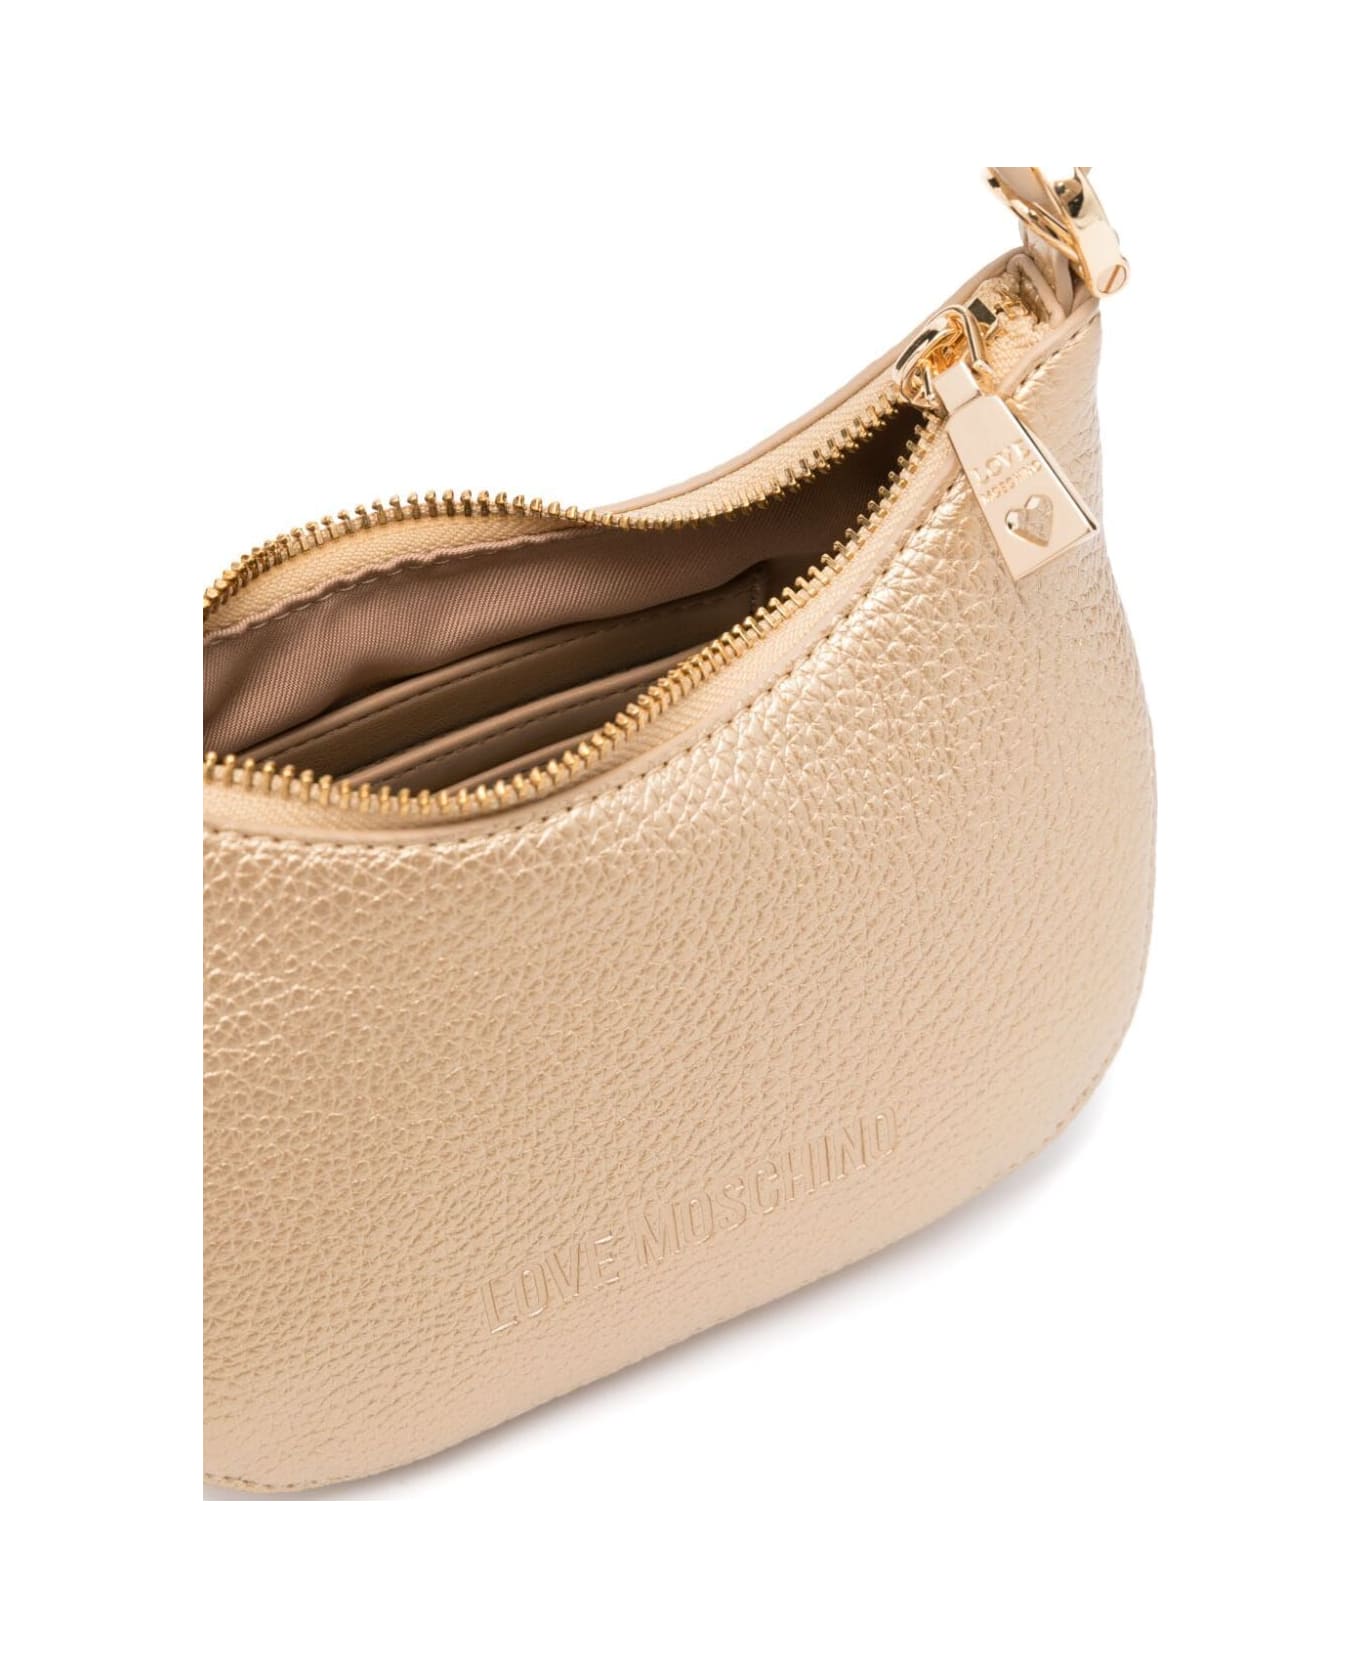 Love Moschino Laminated Shoulder Bag - A Gold